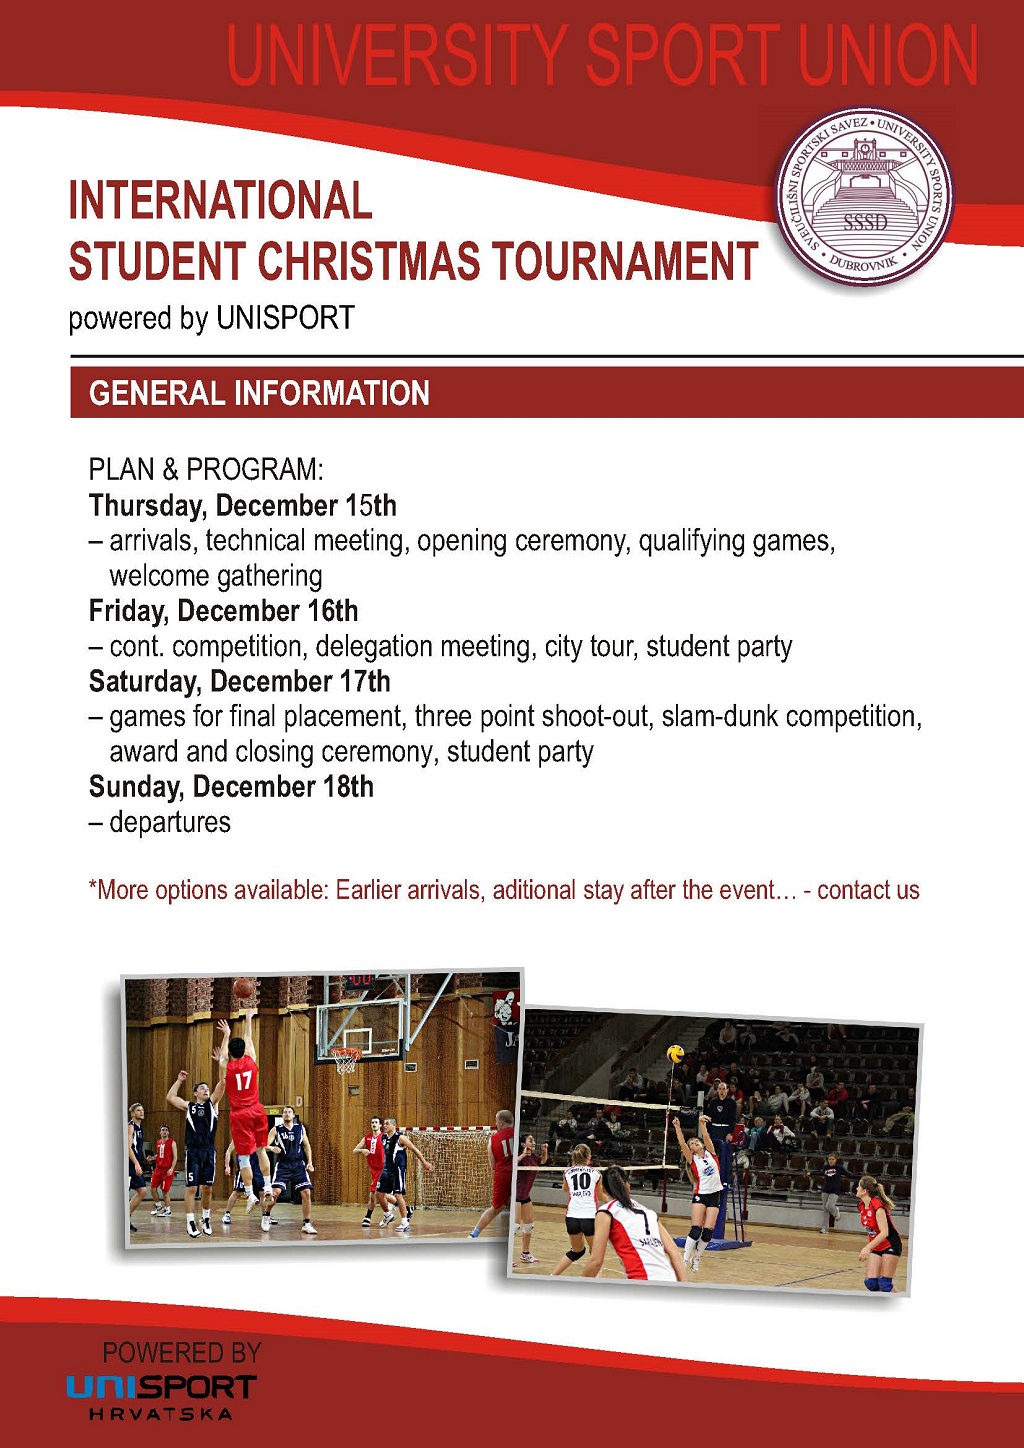 Program details of the tournament